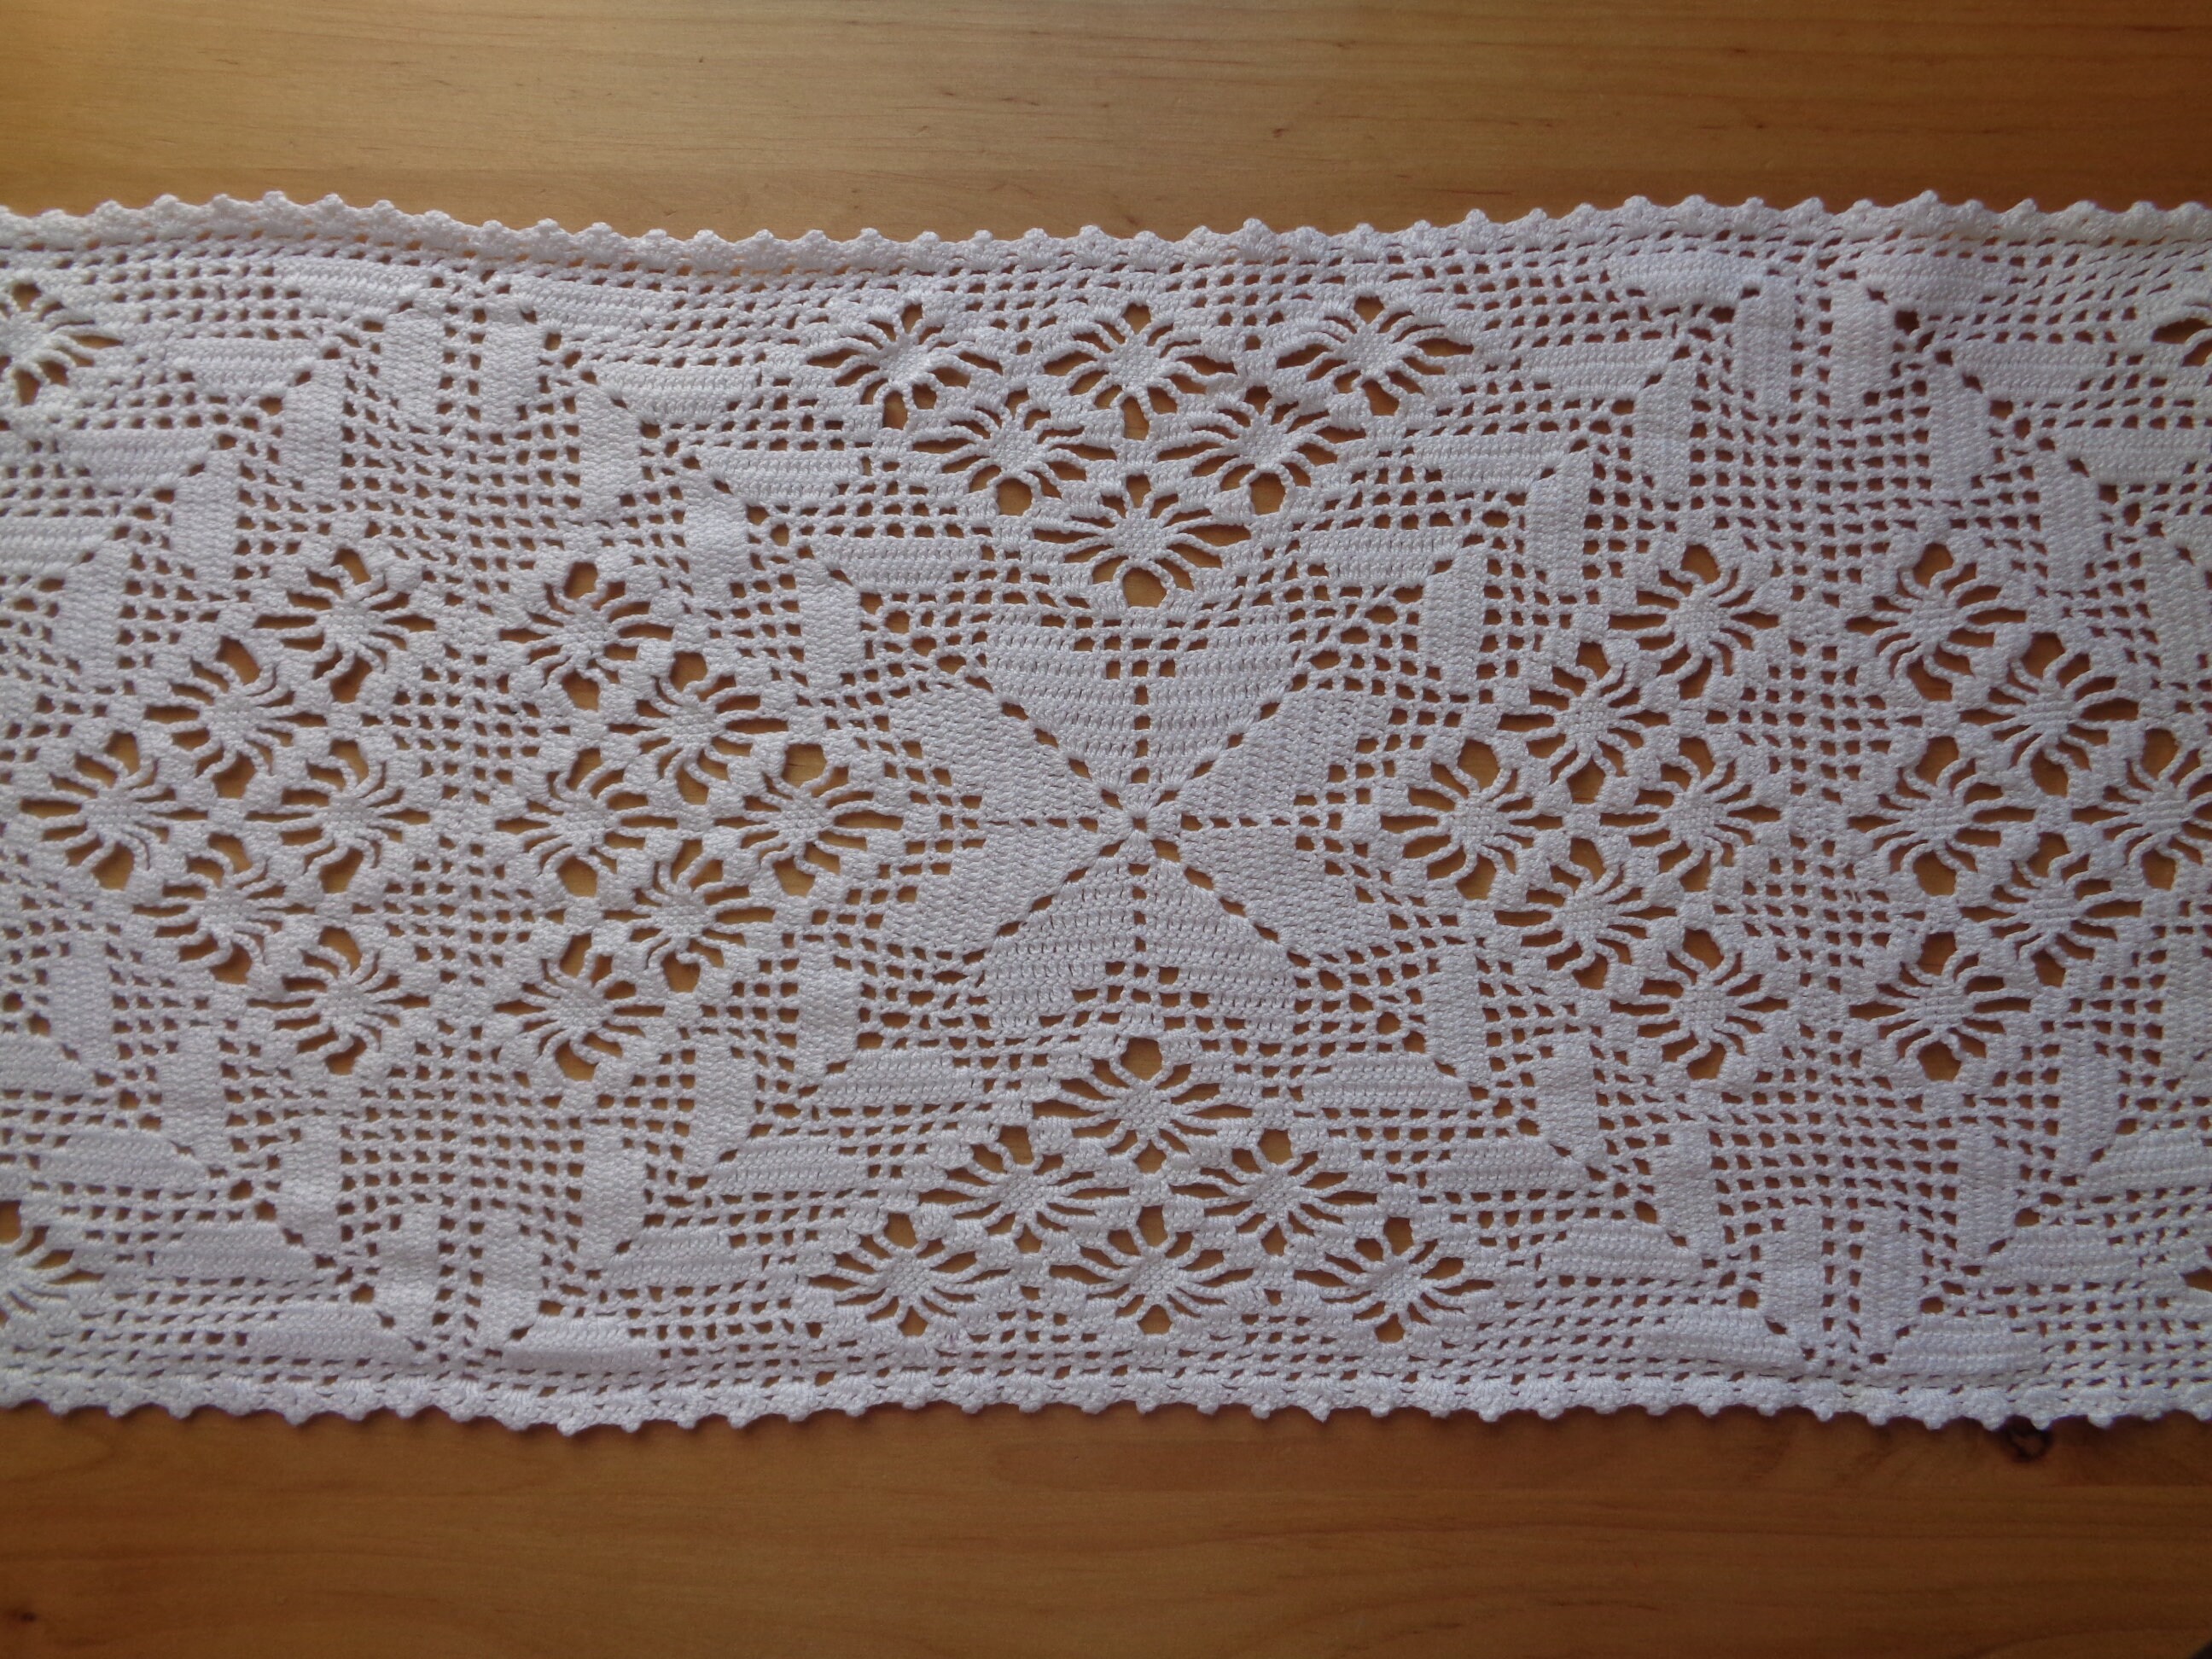 Beige Vintage Crochet Cotton Lace Table Runner Wedding Party Floral Pattern 